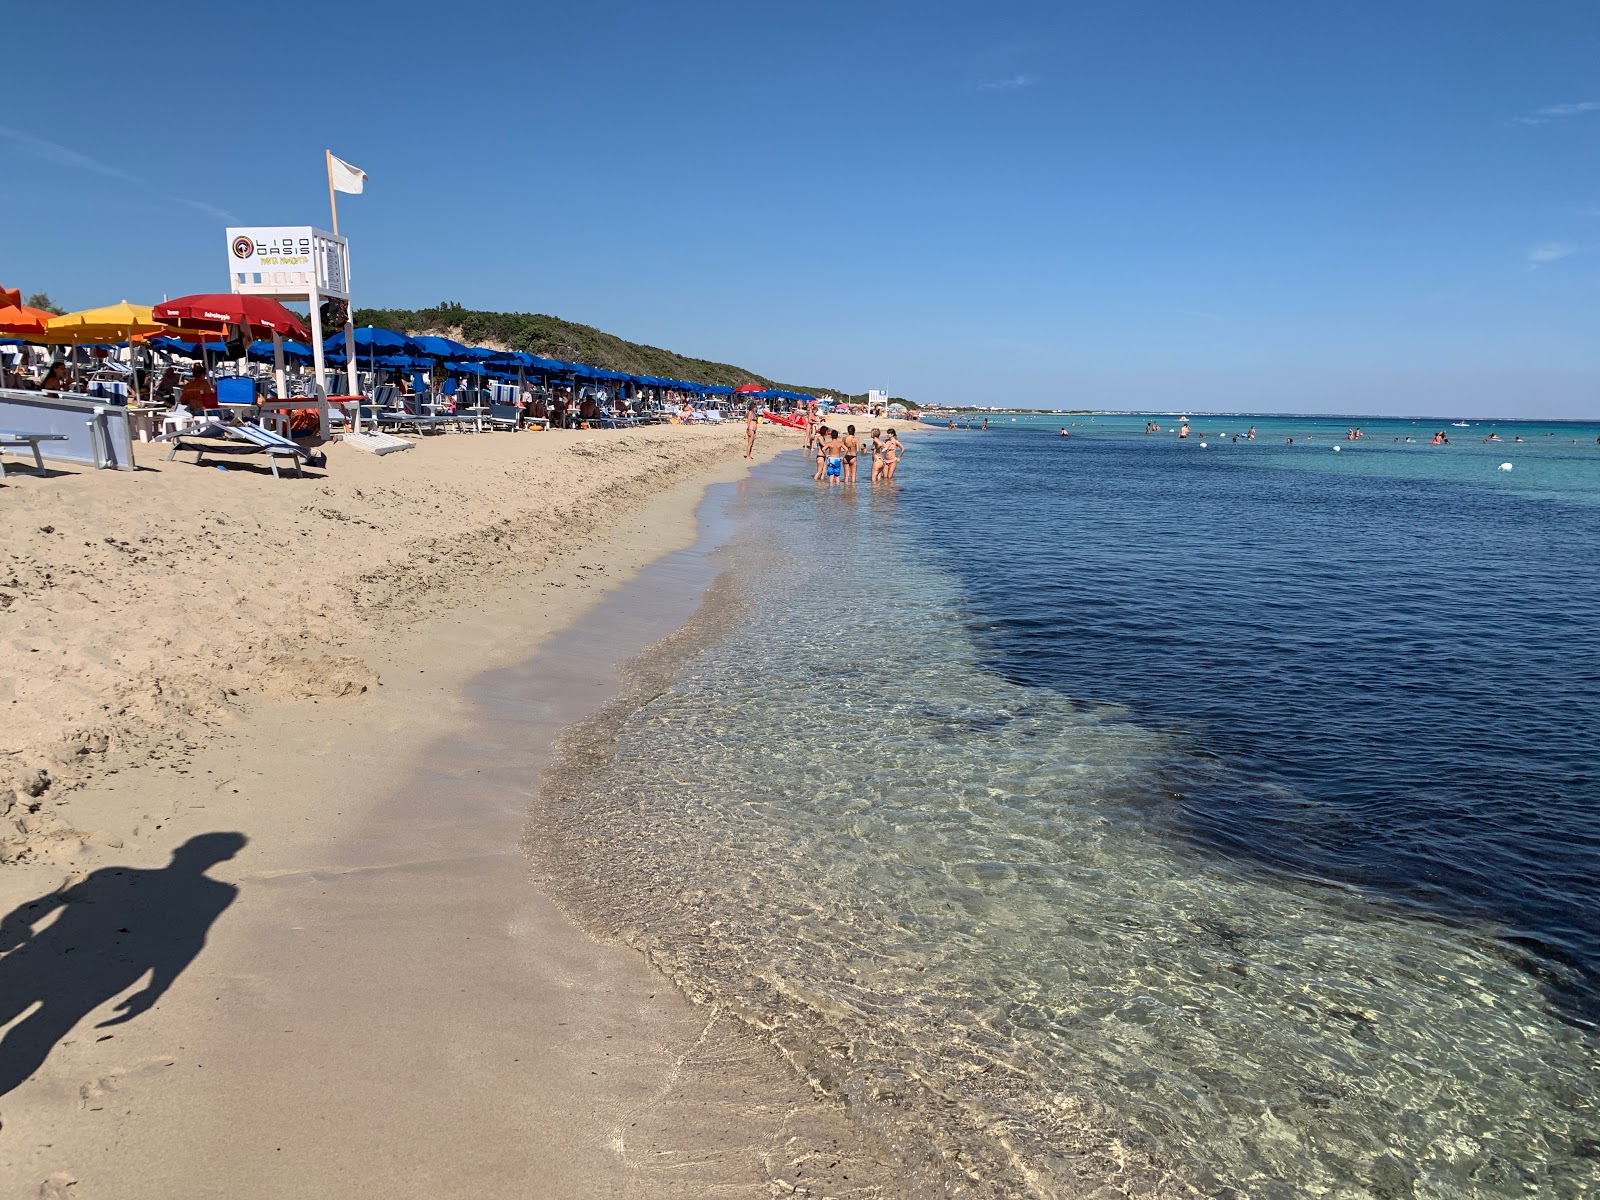 Foto von Spiaggia di Punta Prosciutto mit langer gerader strand